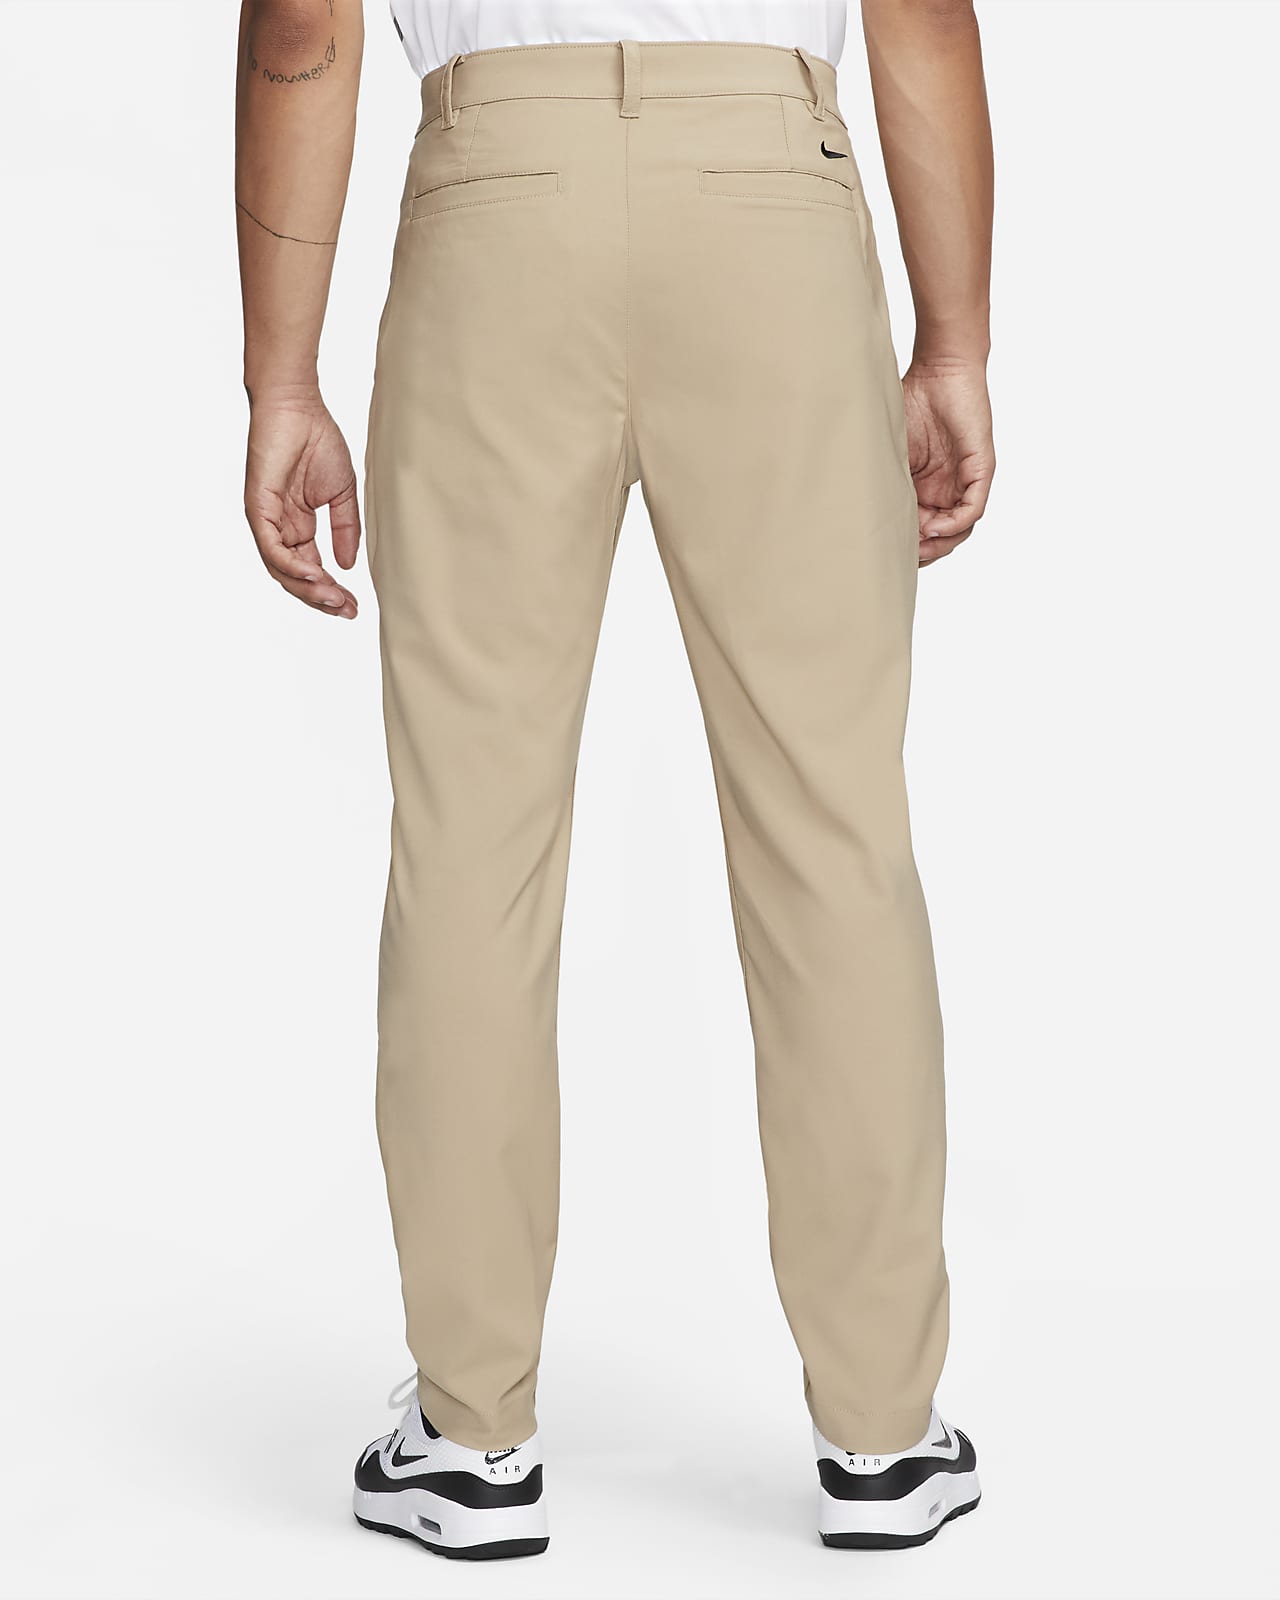 Nike Mens 6 Pocket Black Slim/Dri Fit Golf Pants - New - BV0278